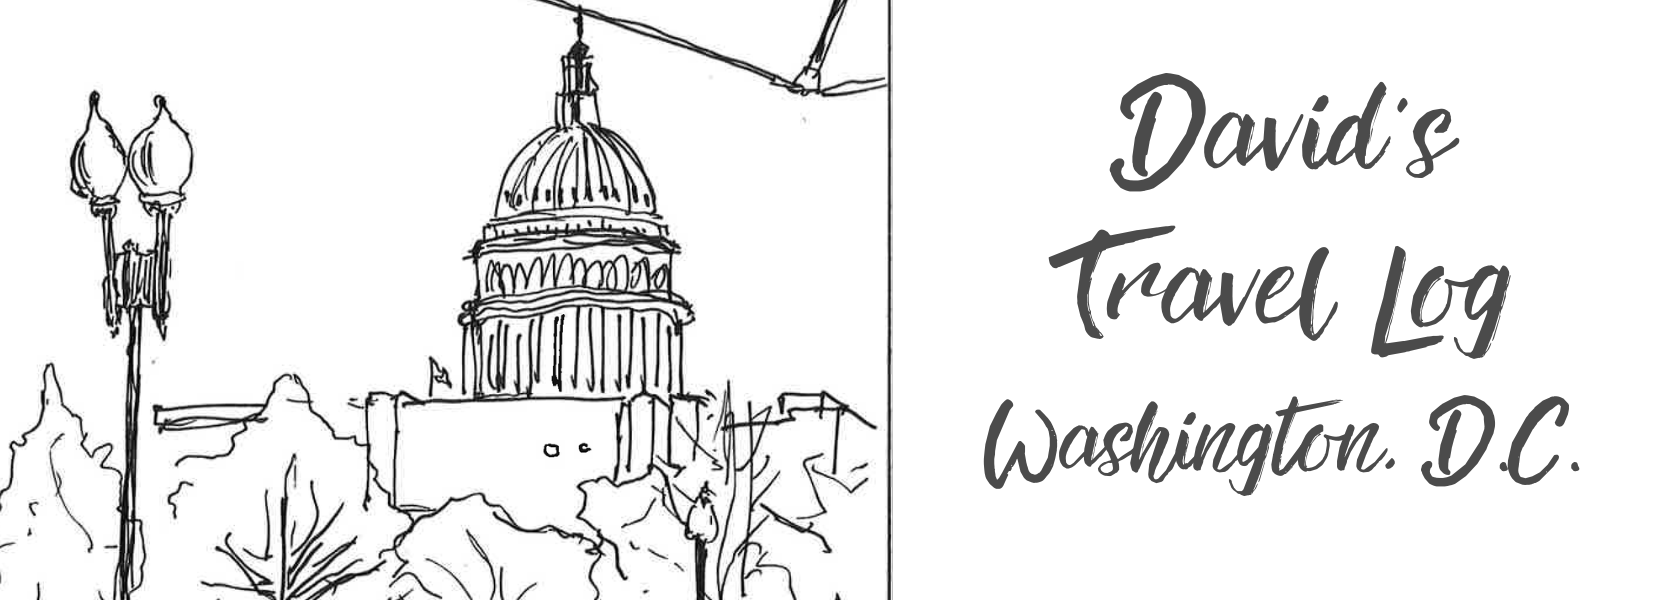 David's Travel Log Washington, D.C. sketch of the U.S. Capitol